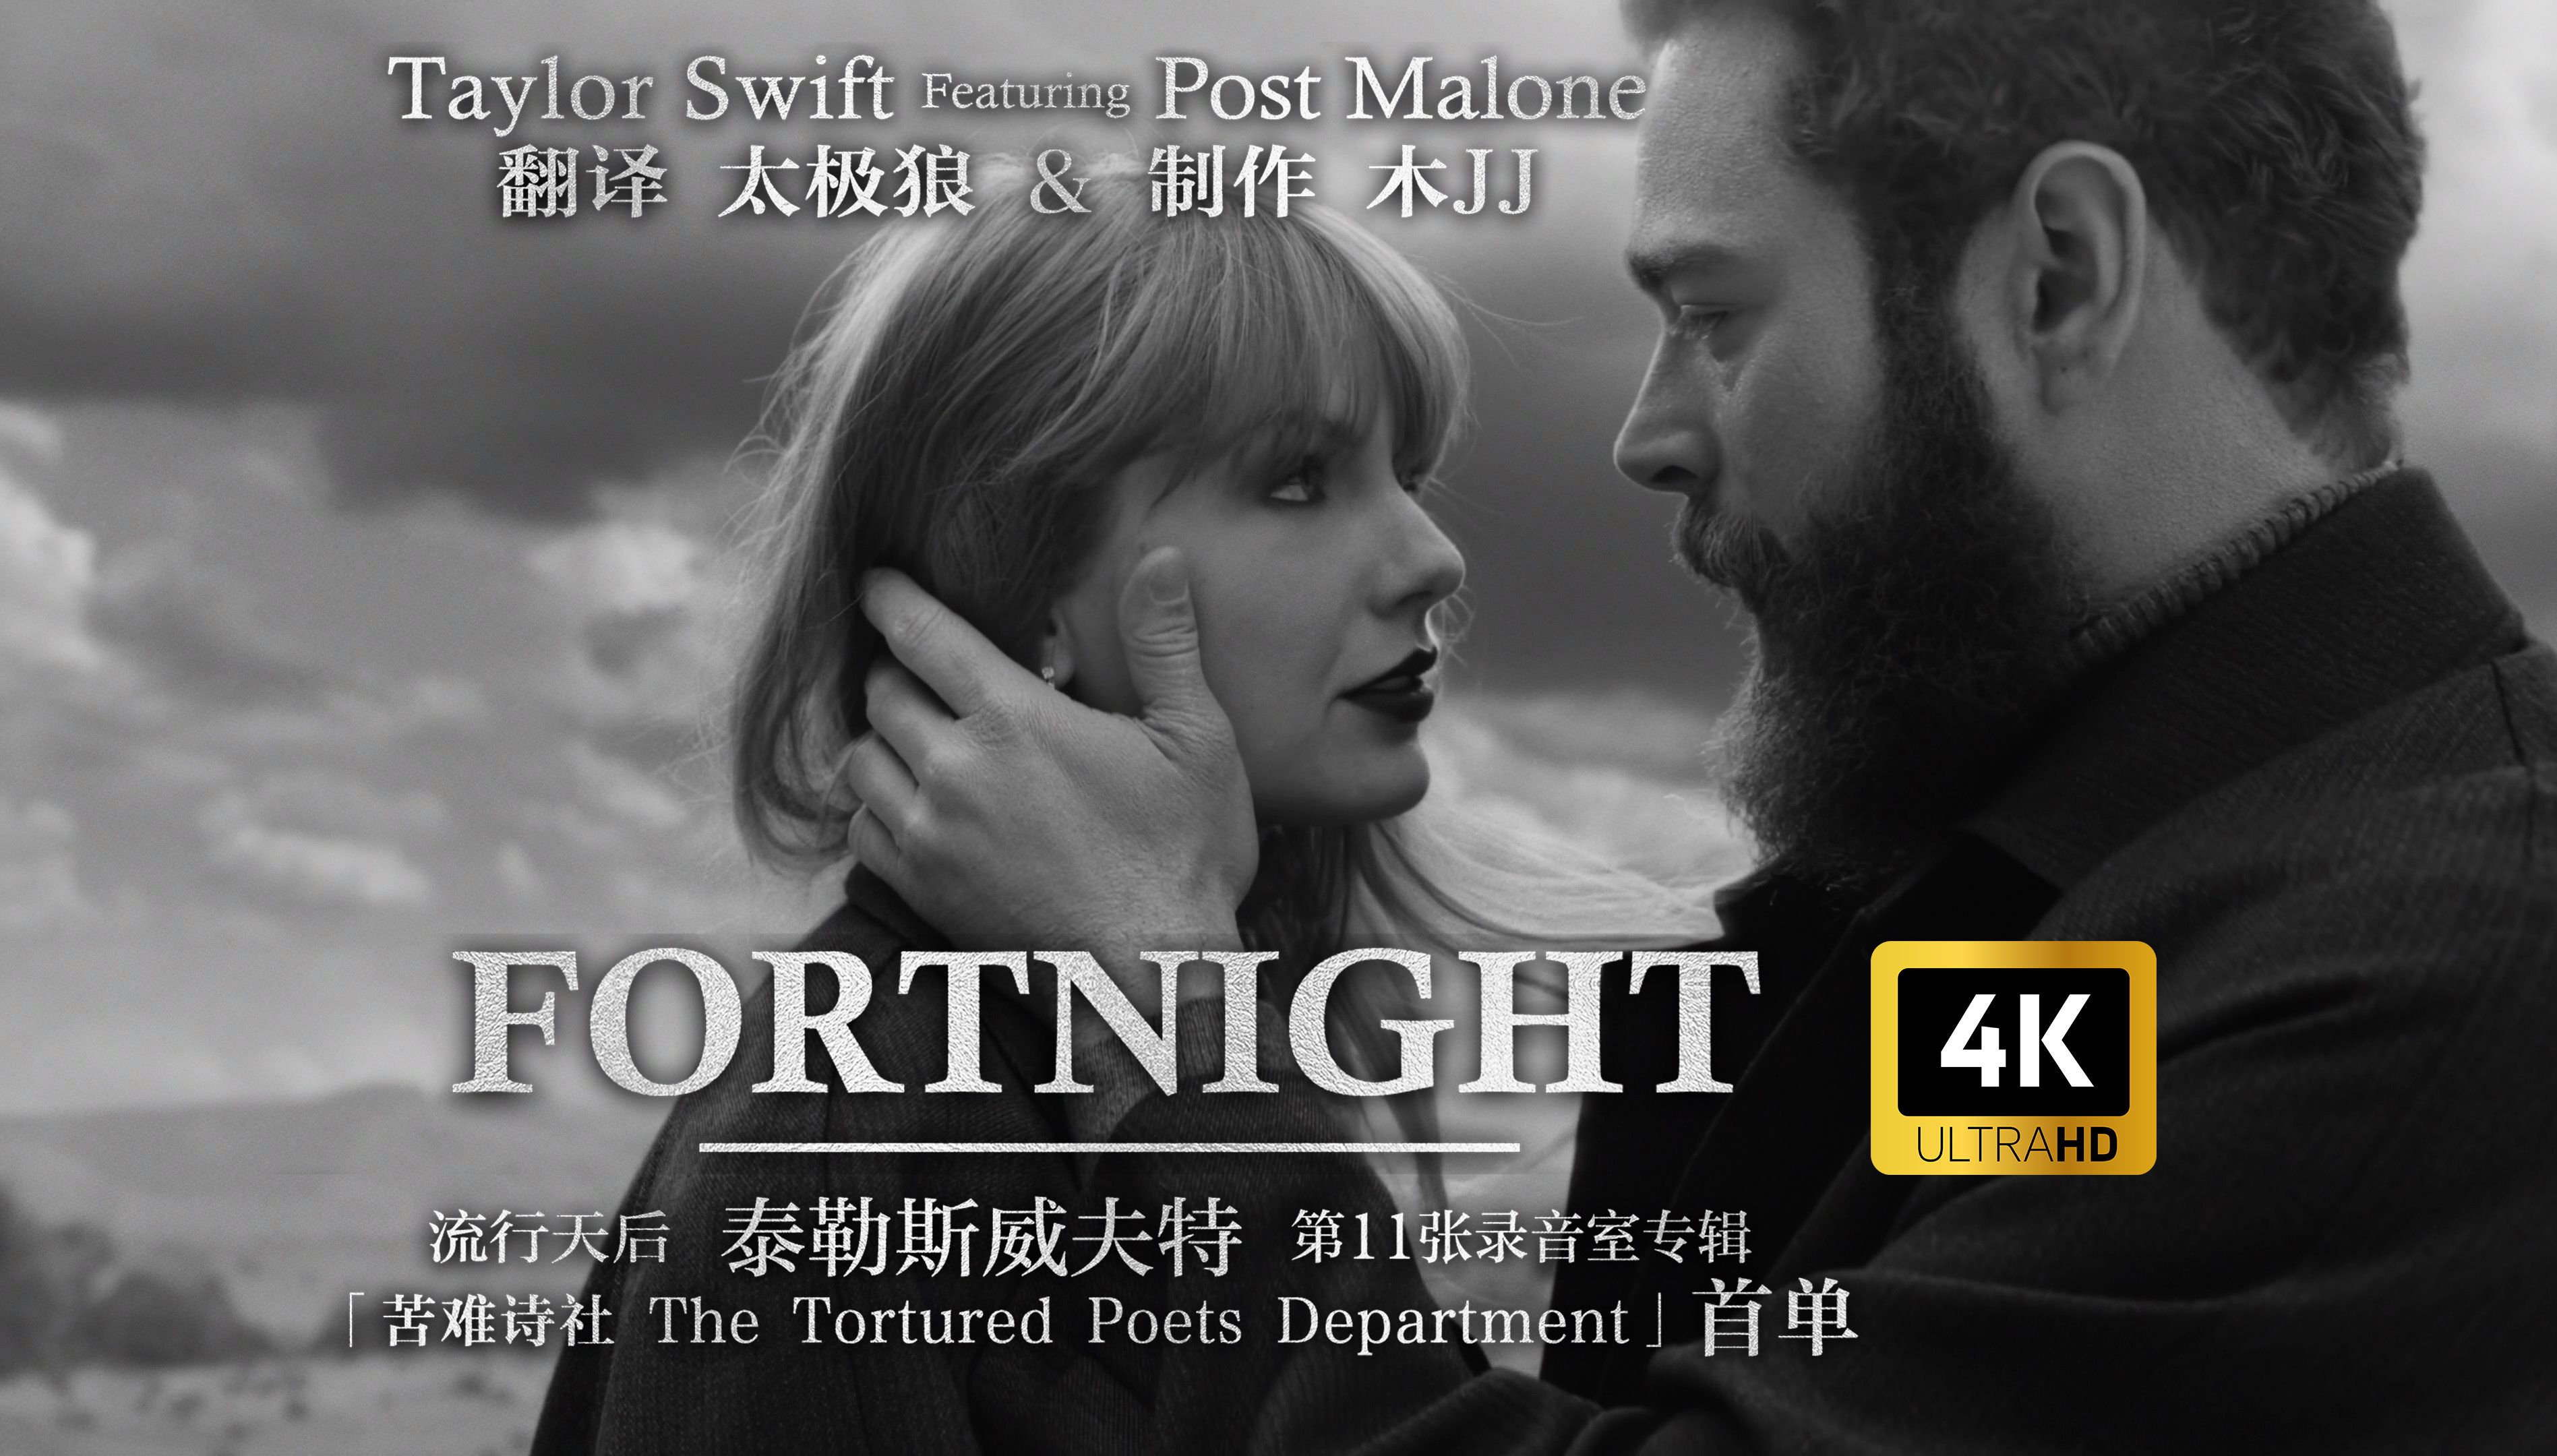 苦难！苦难！！！Taylor Swift Featuring Post Malone - Fortnight 泰勒斯威夫特 新专首单！也是制作组的苦难！